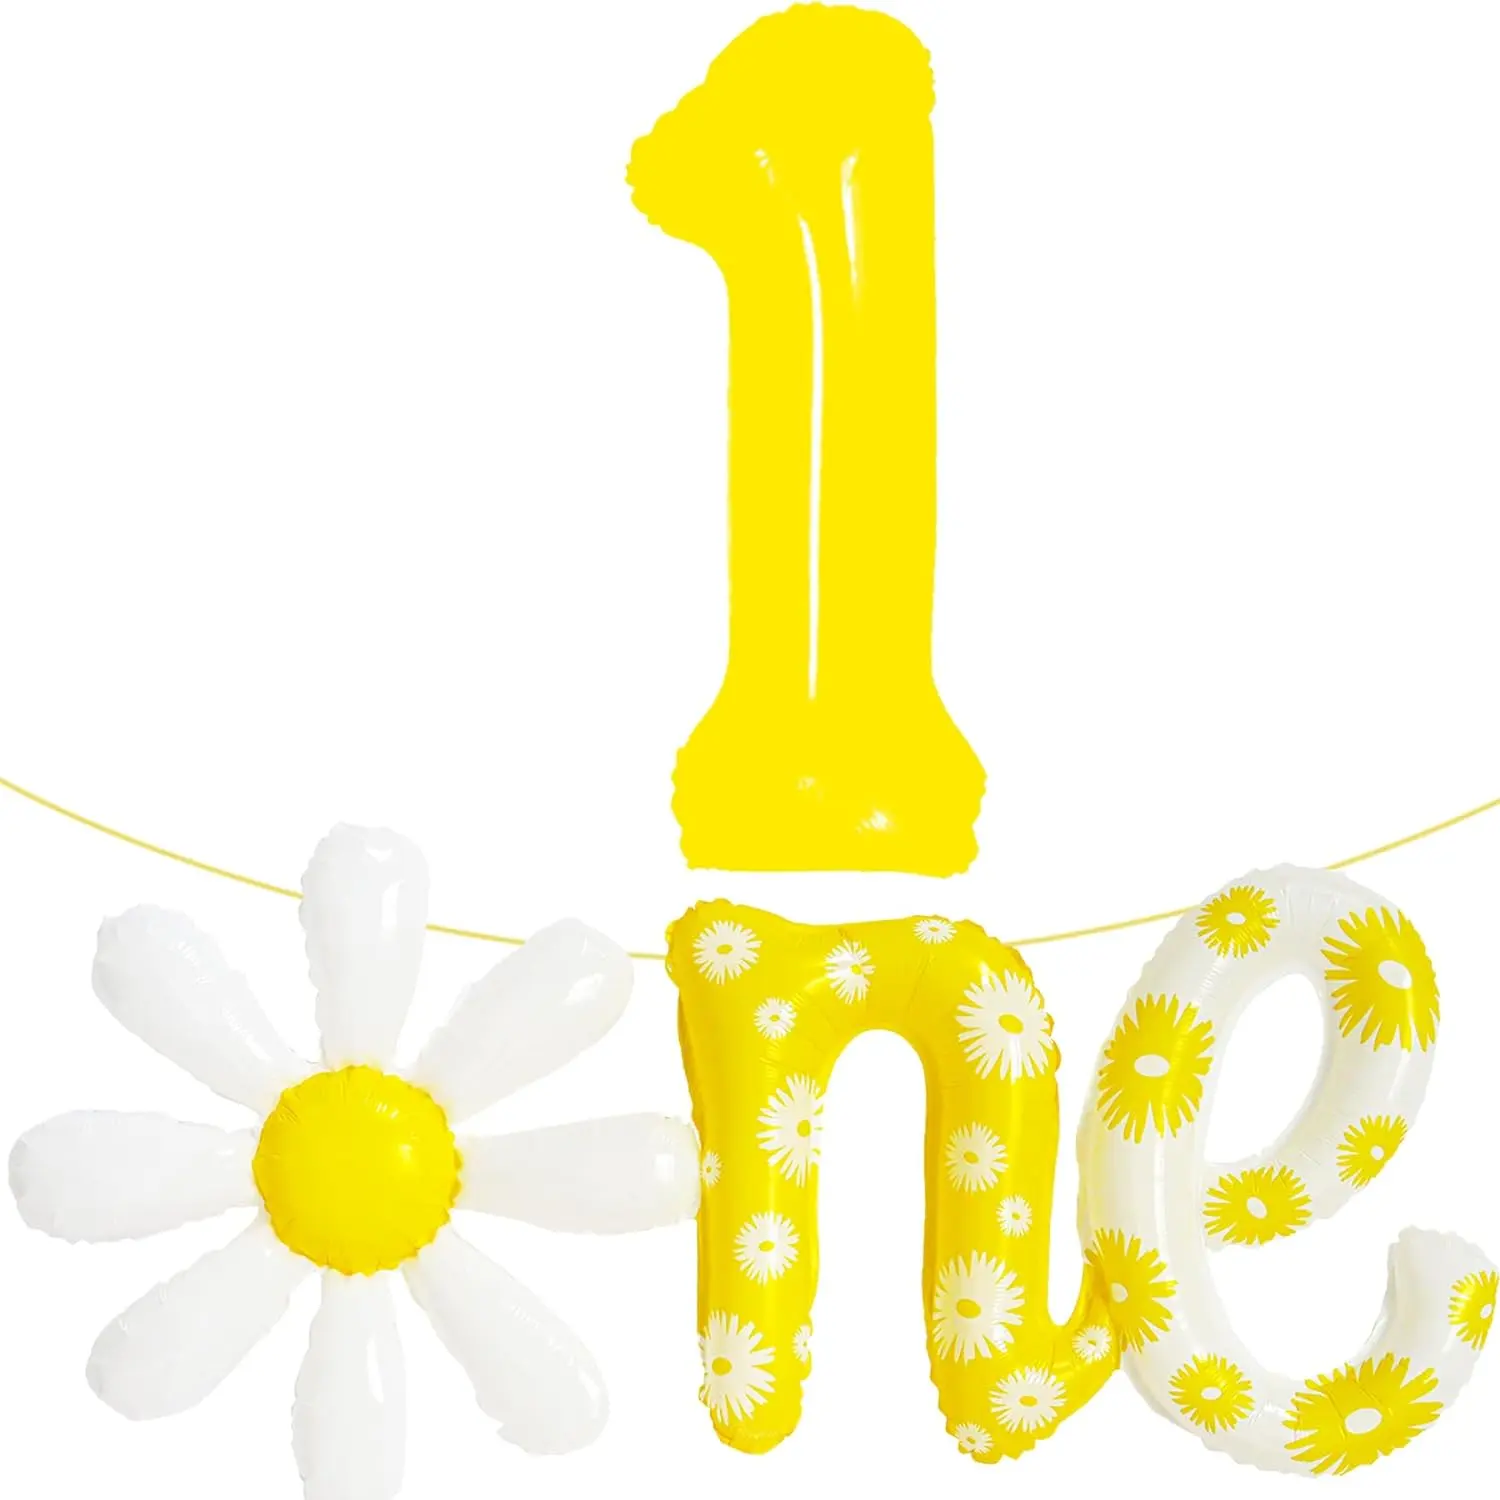 Balon huruf bunga aster satu balon inci balon dekorasi pesta ulang tahun pertama kuning dan putih balon huruf bunga aster